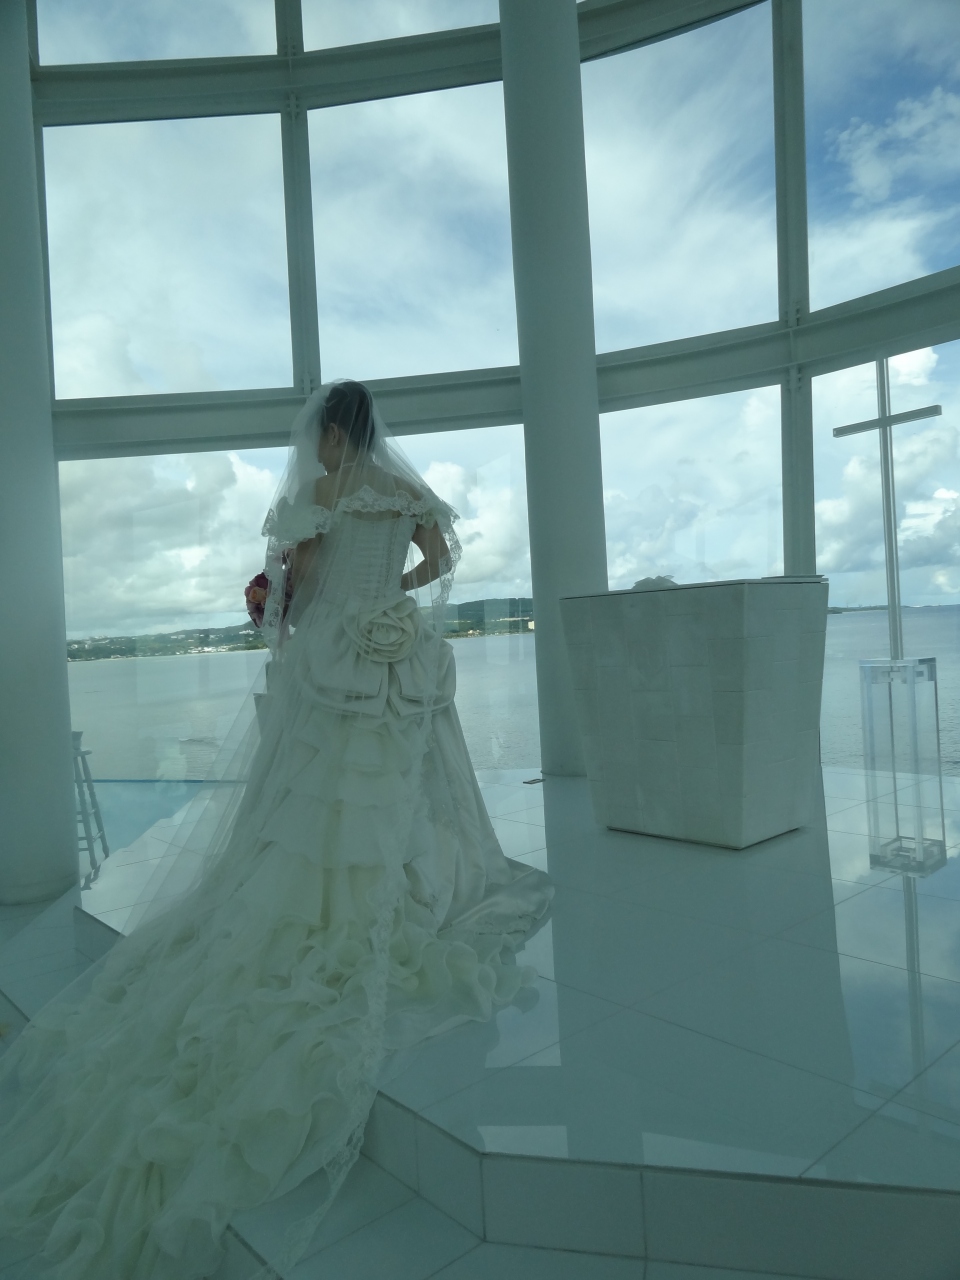 I Love Guam ｖｏｌ 2 ｗｈｉｔｅ ａｒｒｏｗ ｃｈａｐｅｌ Guam Wedding参列編 グアム グアム の旅行記 ブログ By さや犬さん フォートラベル